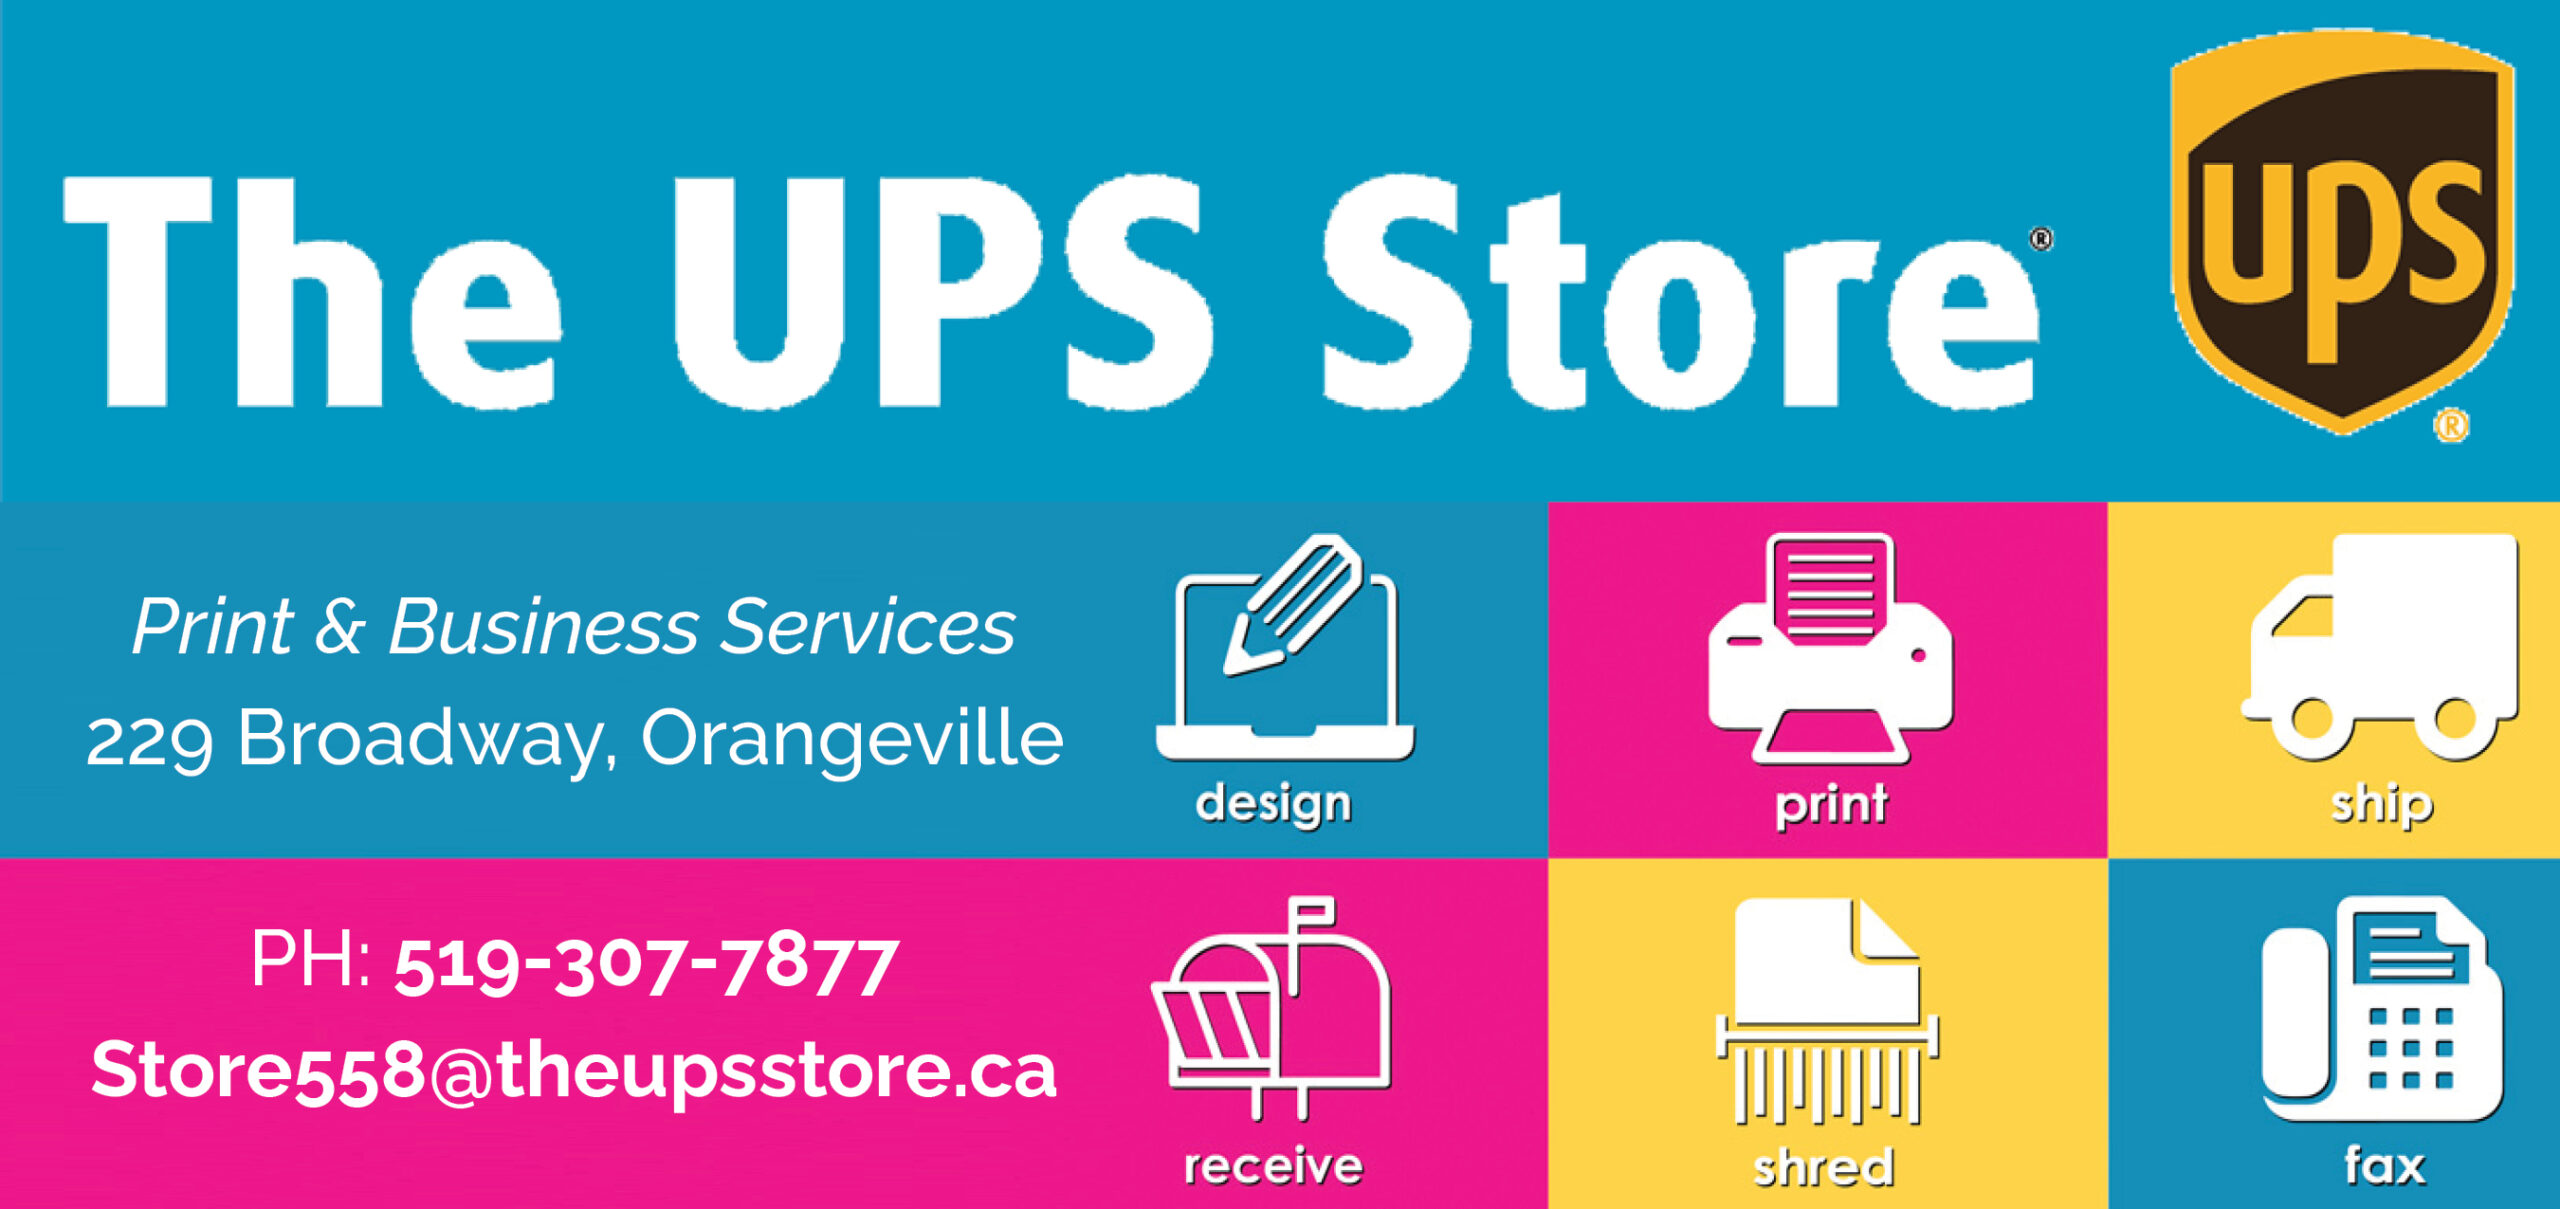 The UPS Store - Orangeville